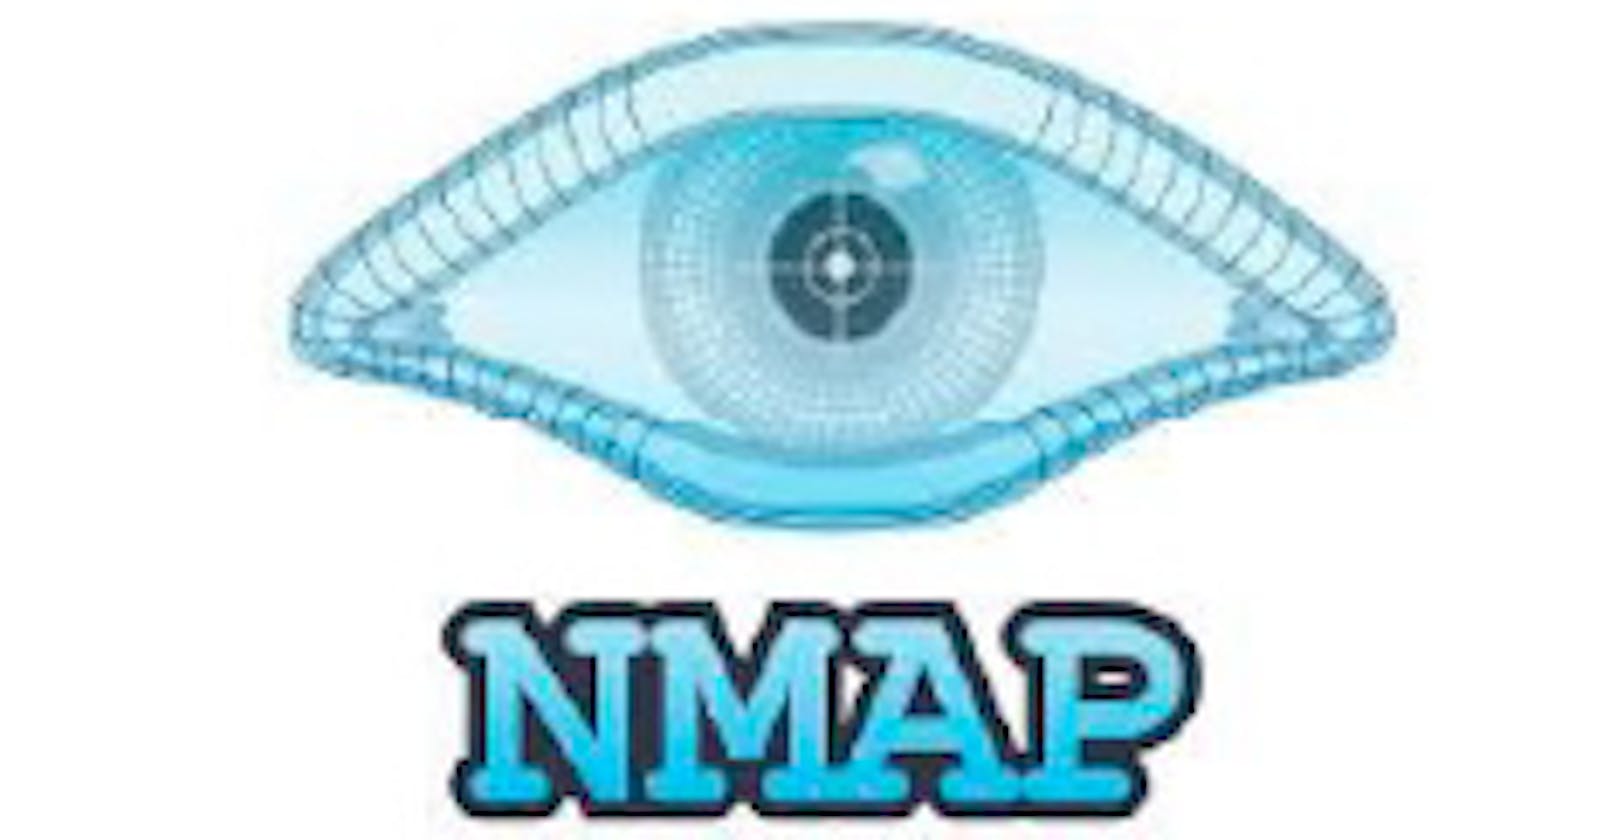 Cyber Security Tools: Nmap